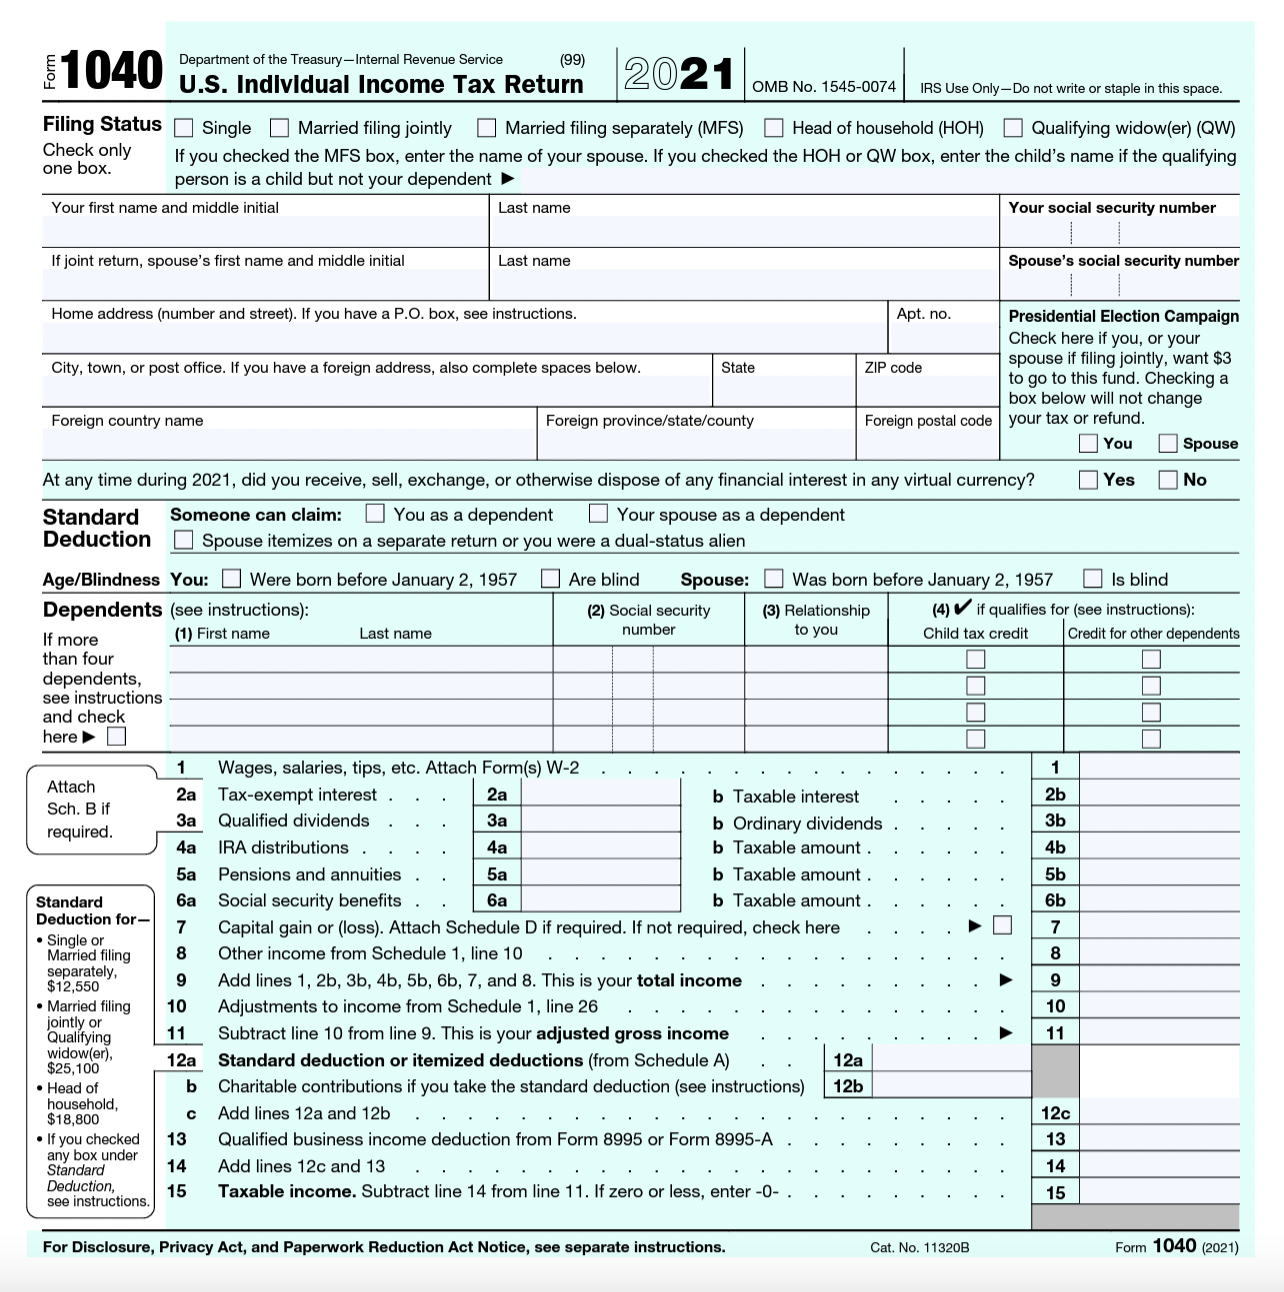 2021 IRS Form 1040